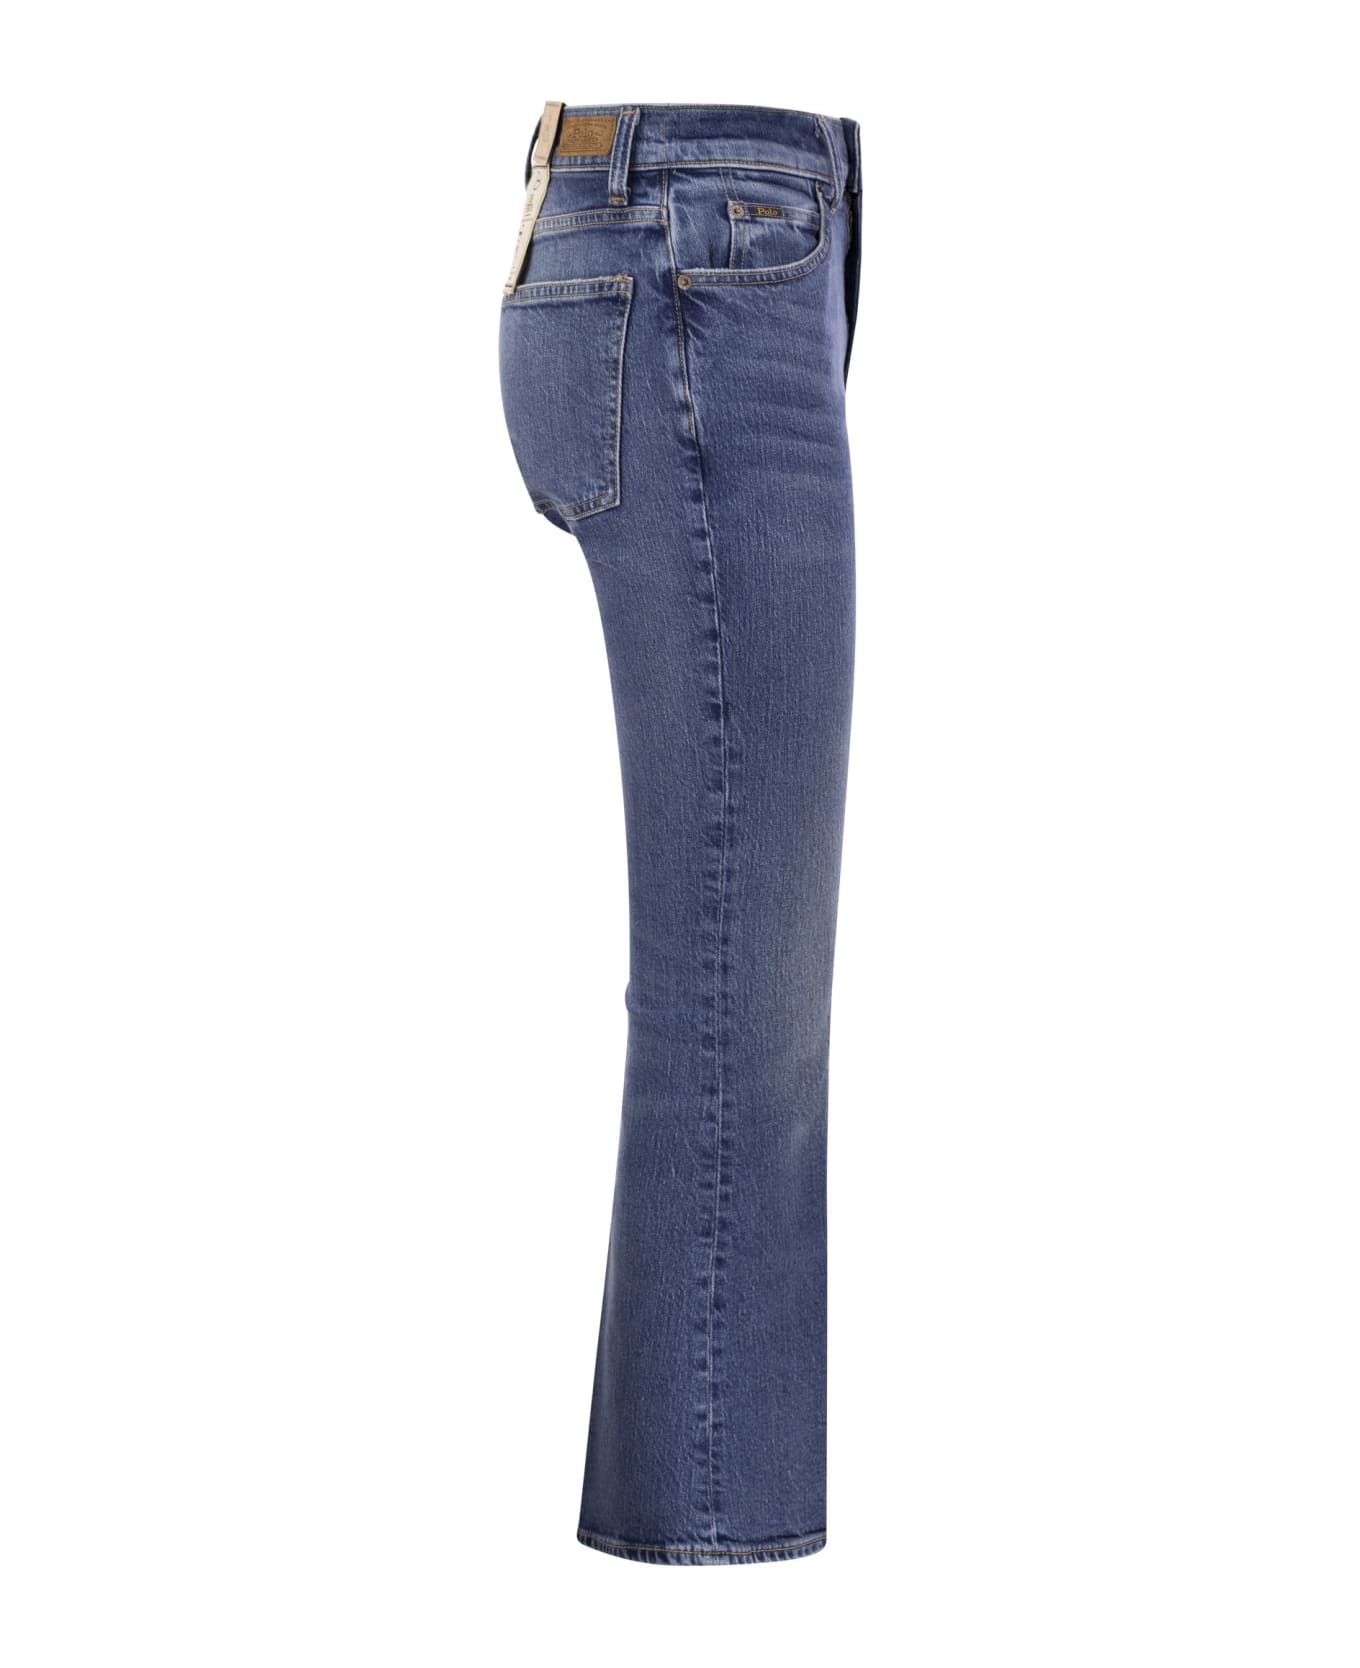 Polo Ralph Lauren Short And Flared Jeans - Medium Denim デニム